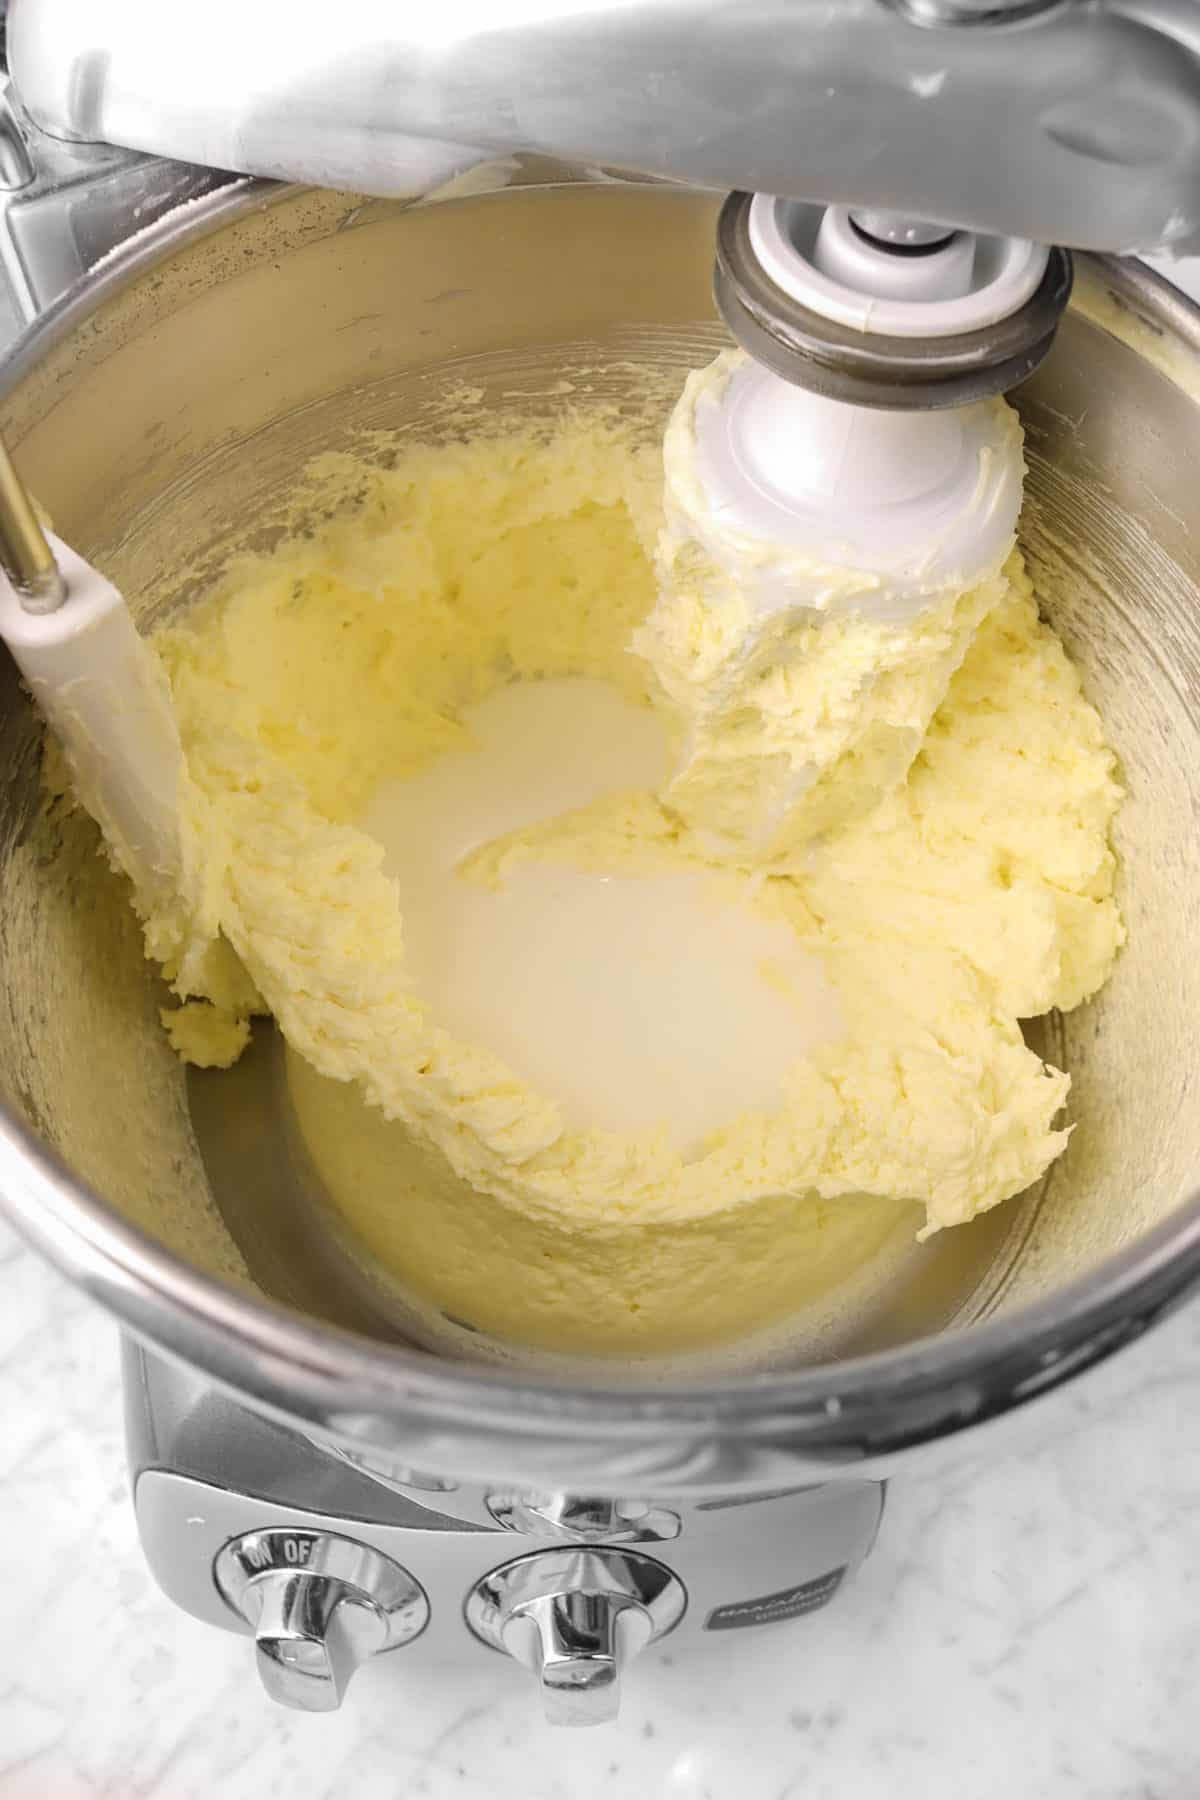 milk added to butter mixture